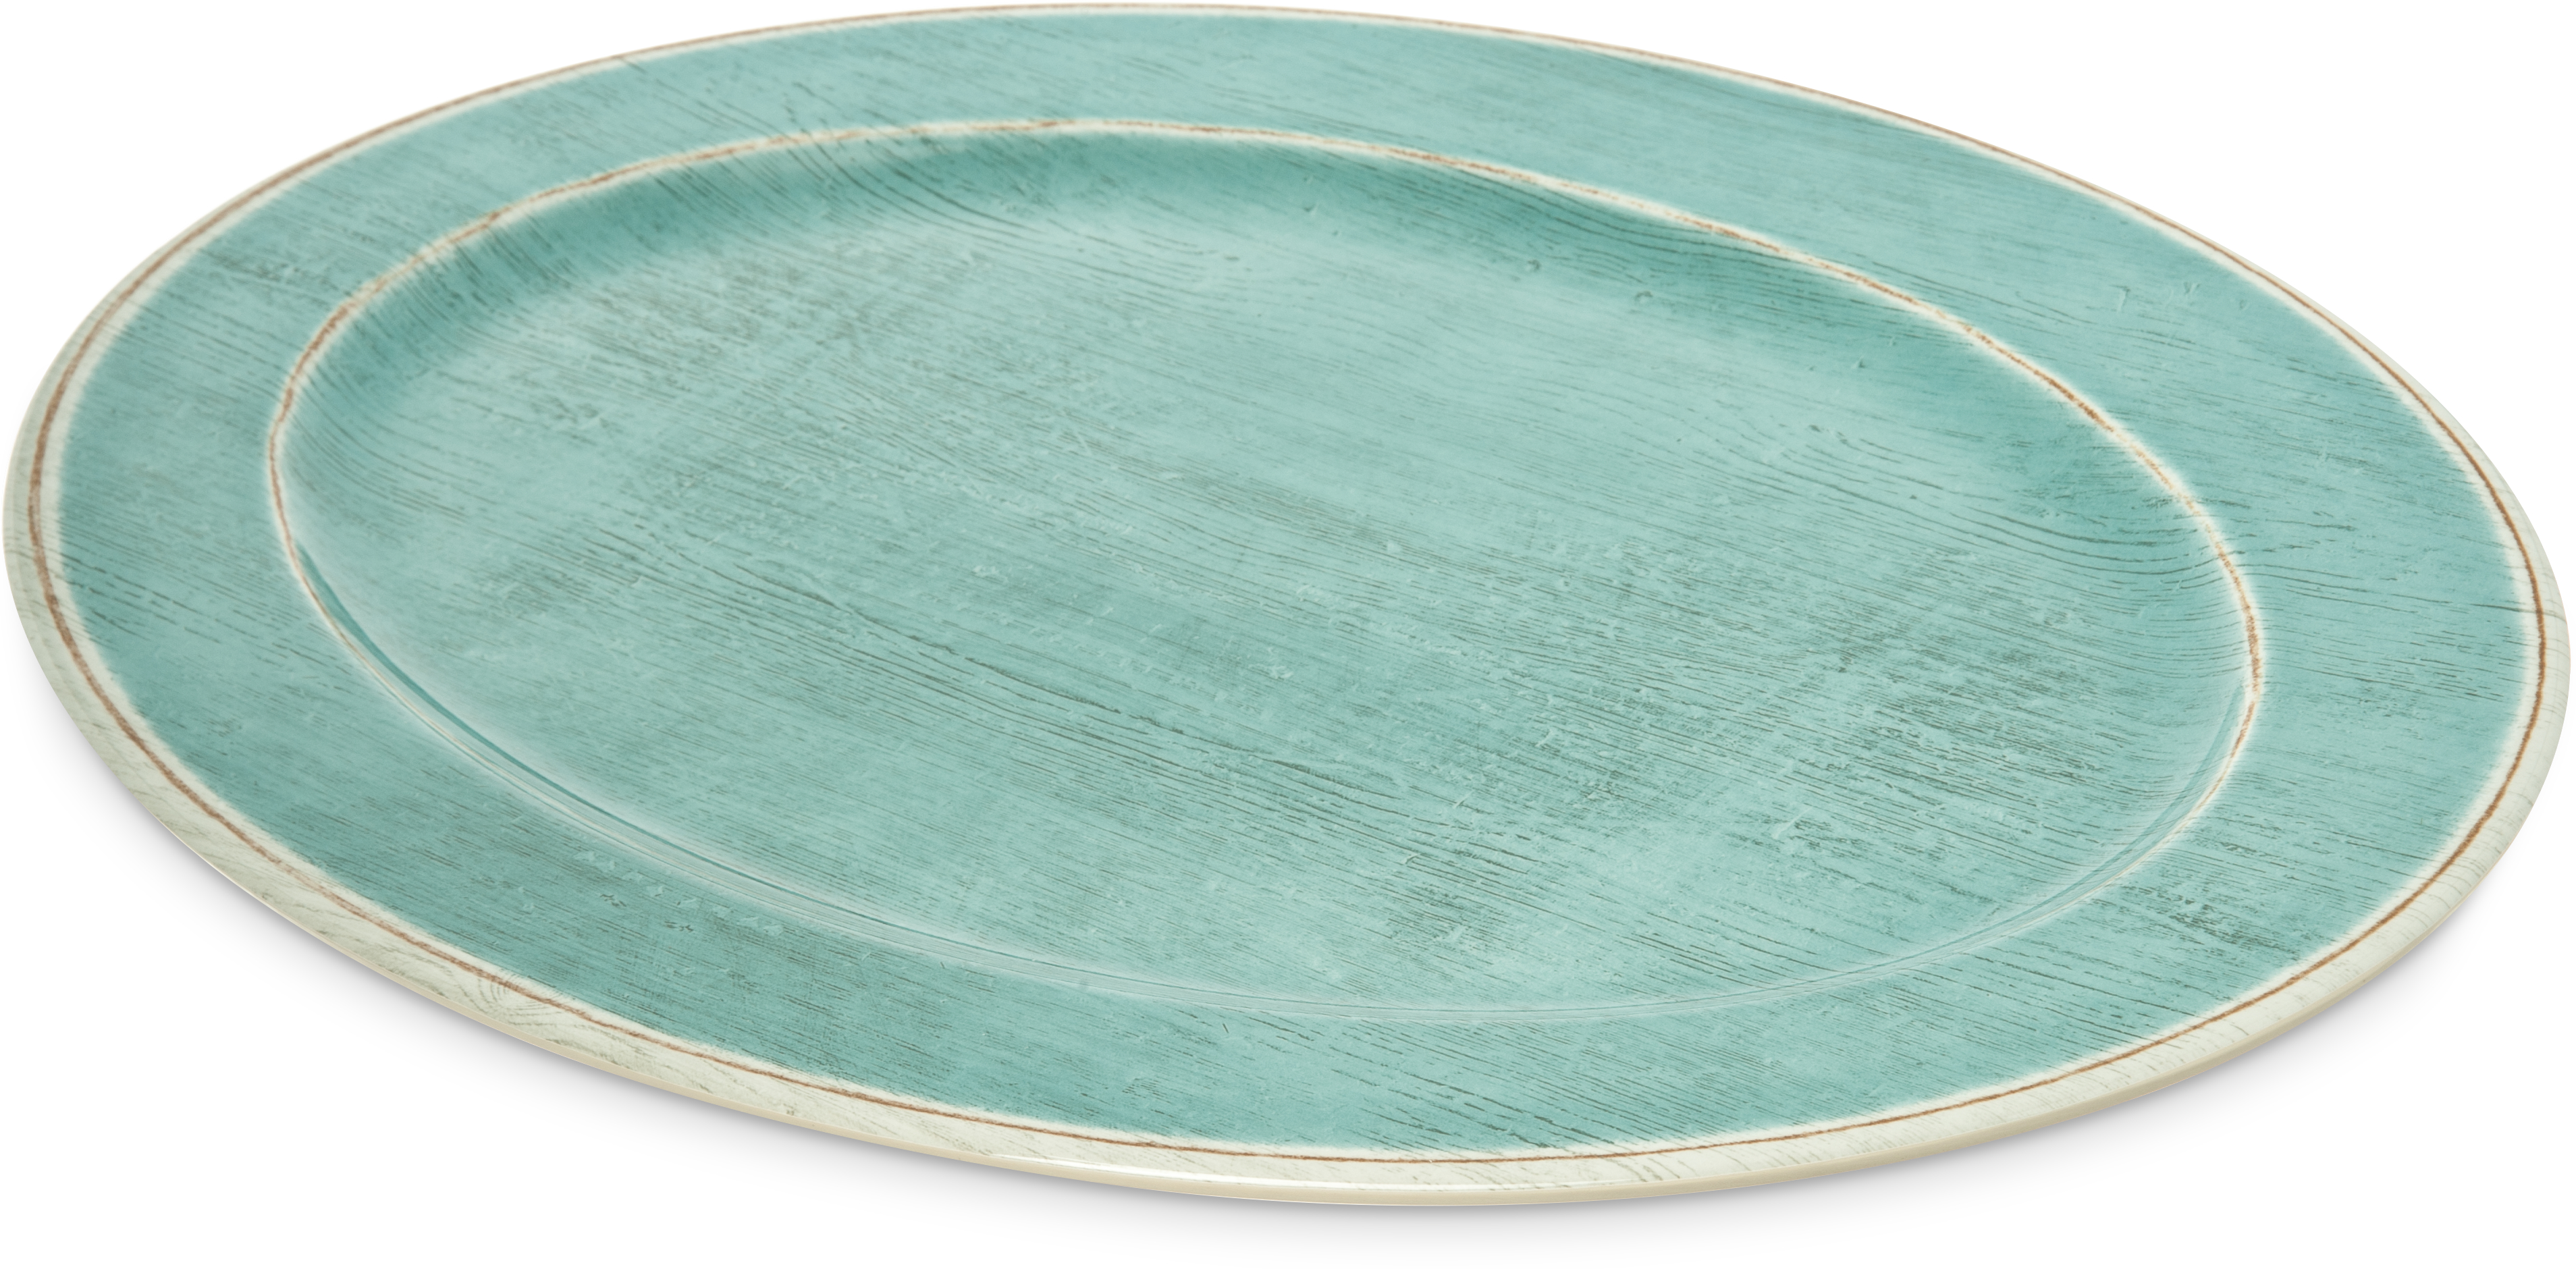 Melamine Oval Platter Tray 20 x 14 - Aqua